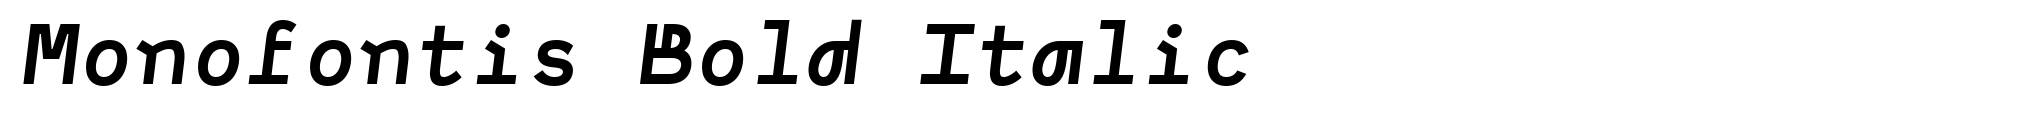 Monofontis Bold Italic image